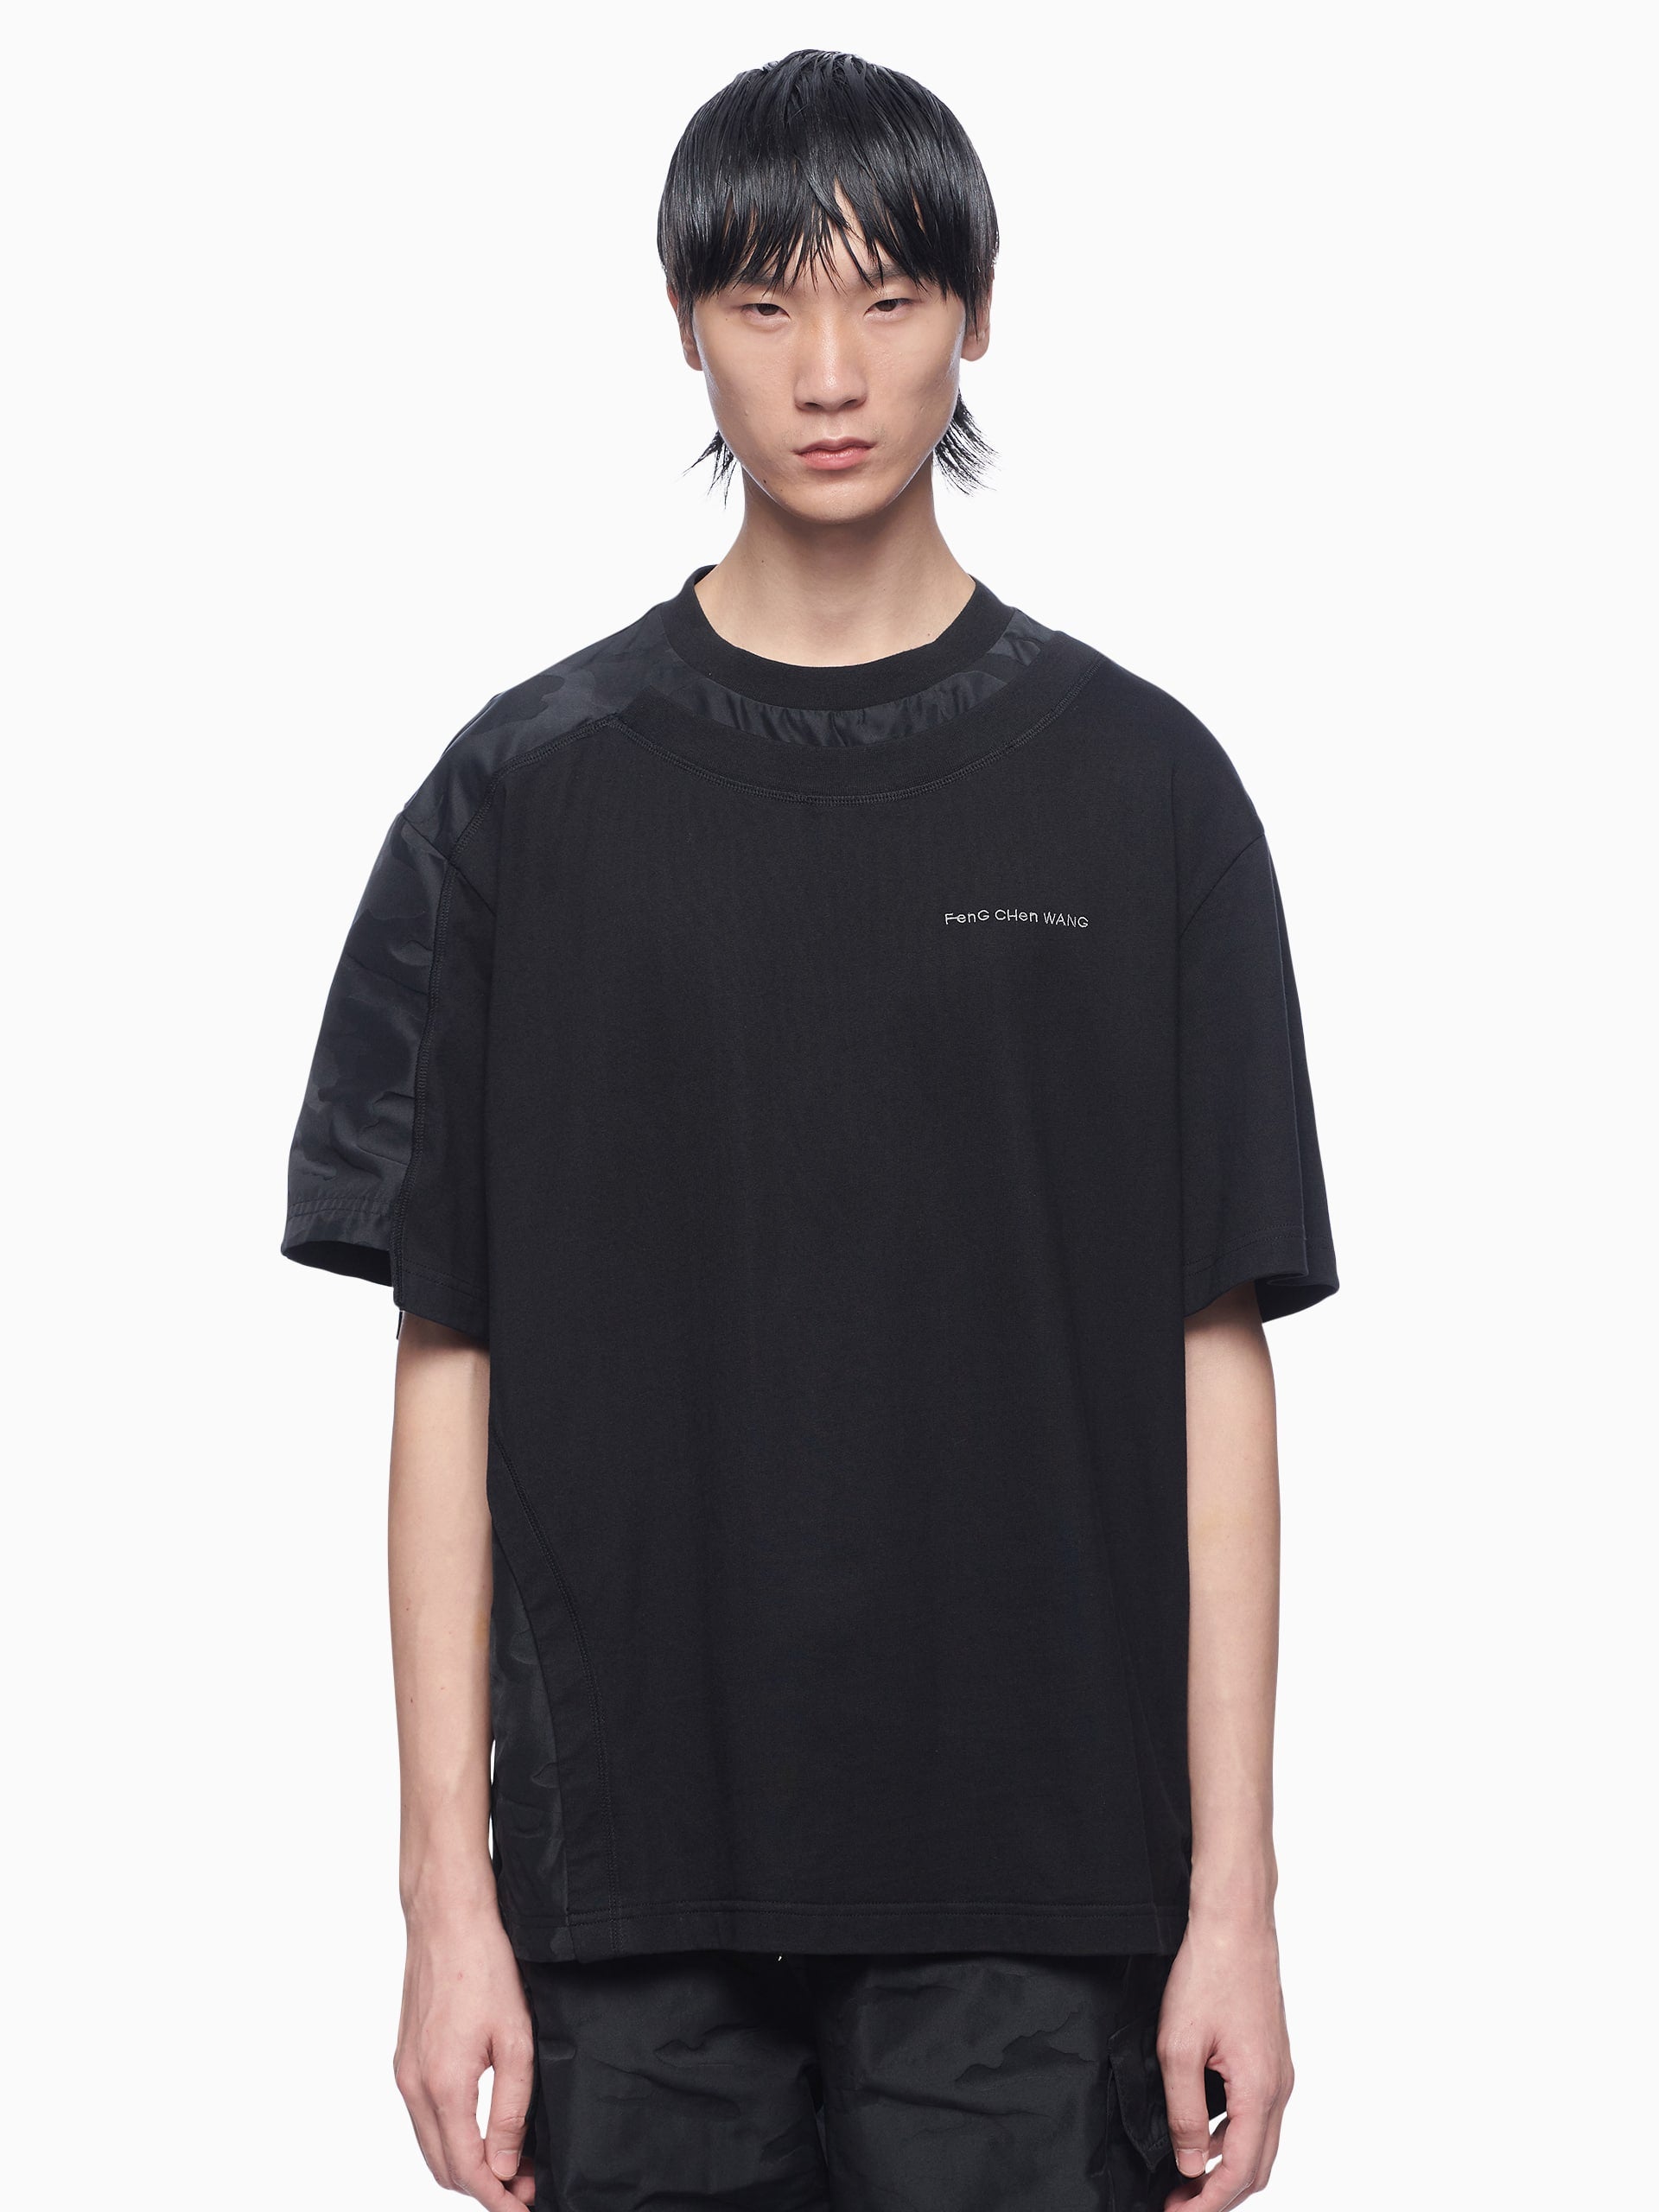 Feng Chen Wang フェンチェンワン Tシャツ・カットソー M 黒あり光沢